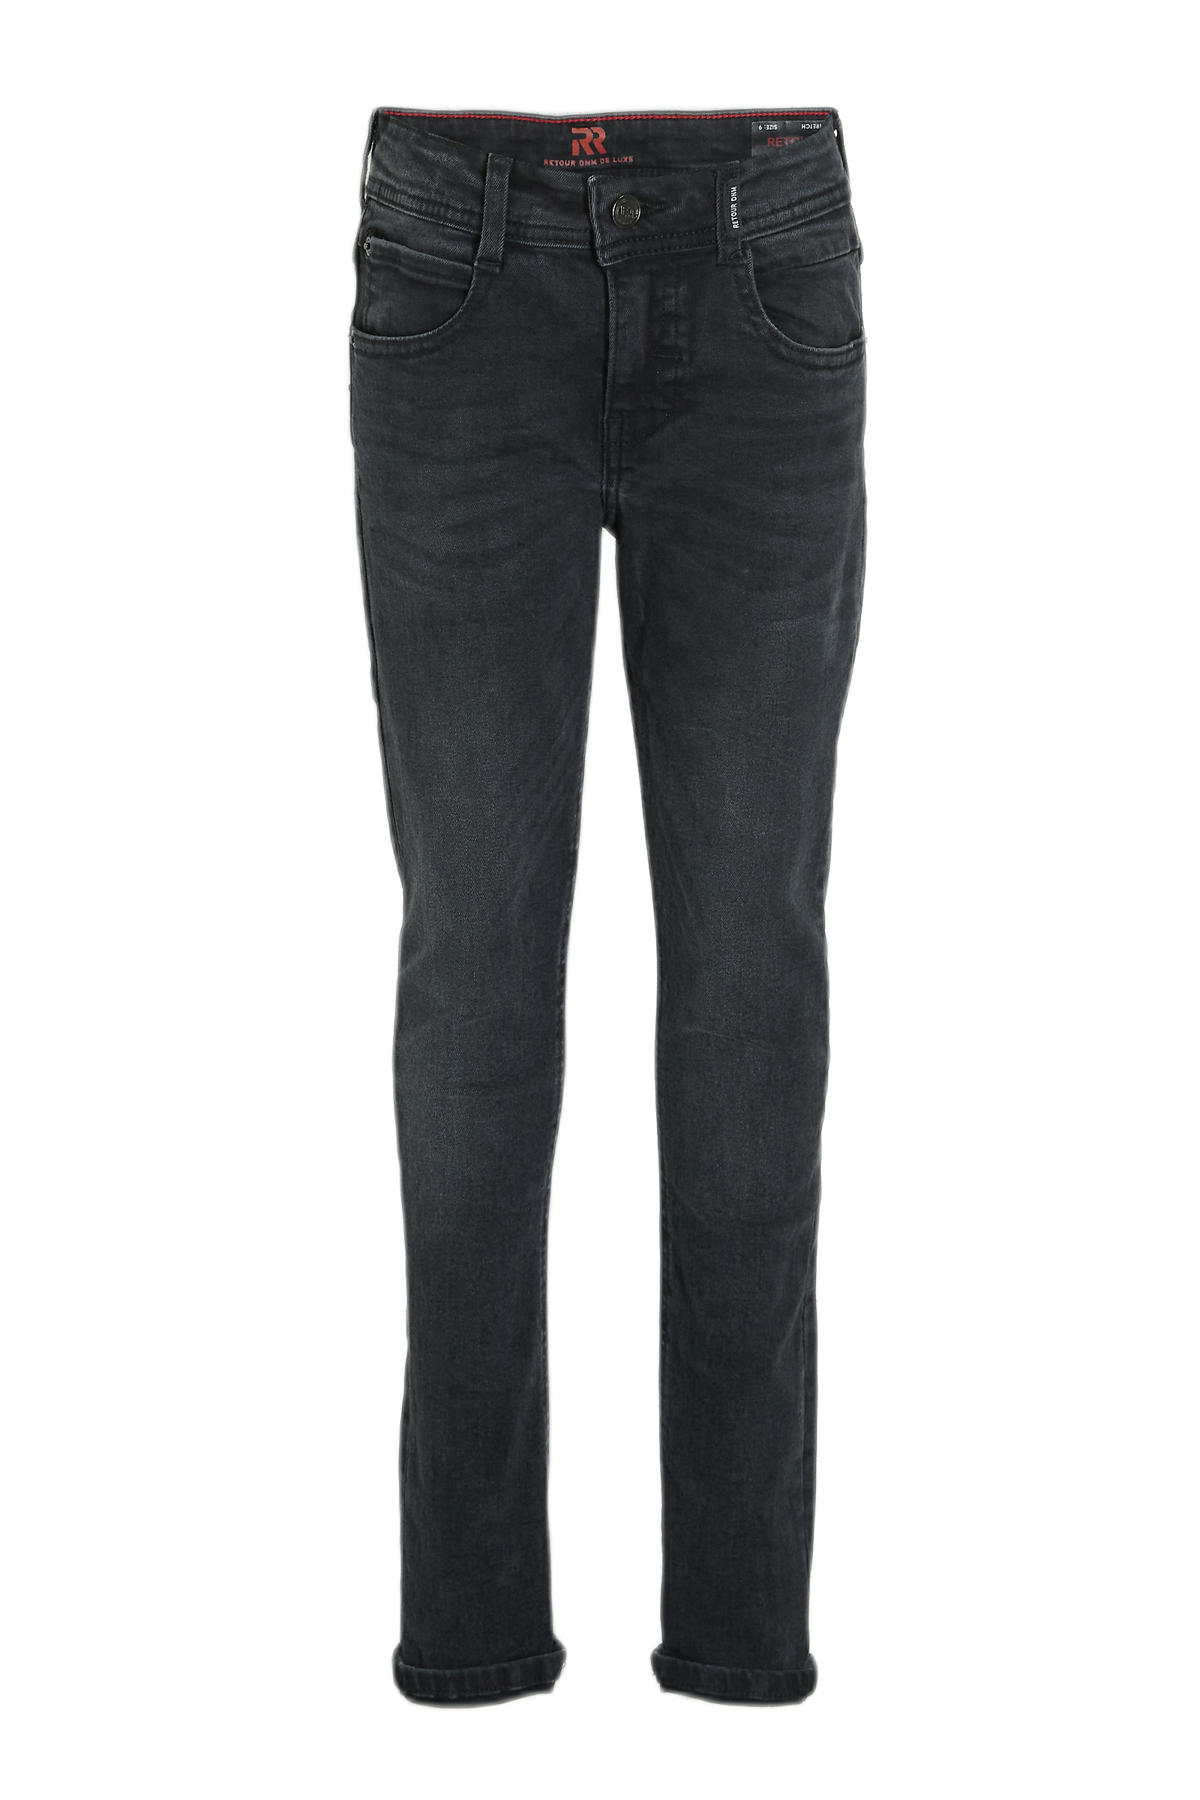 Retour Denim tapered fit jeans Wyatt black denim | kleertjes.com